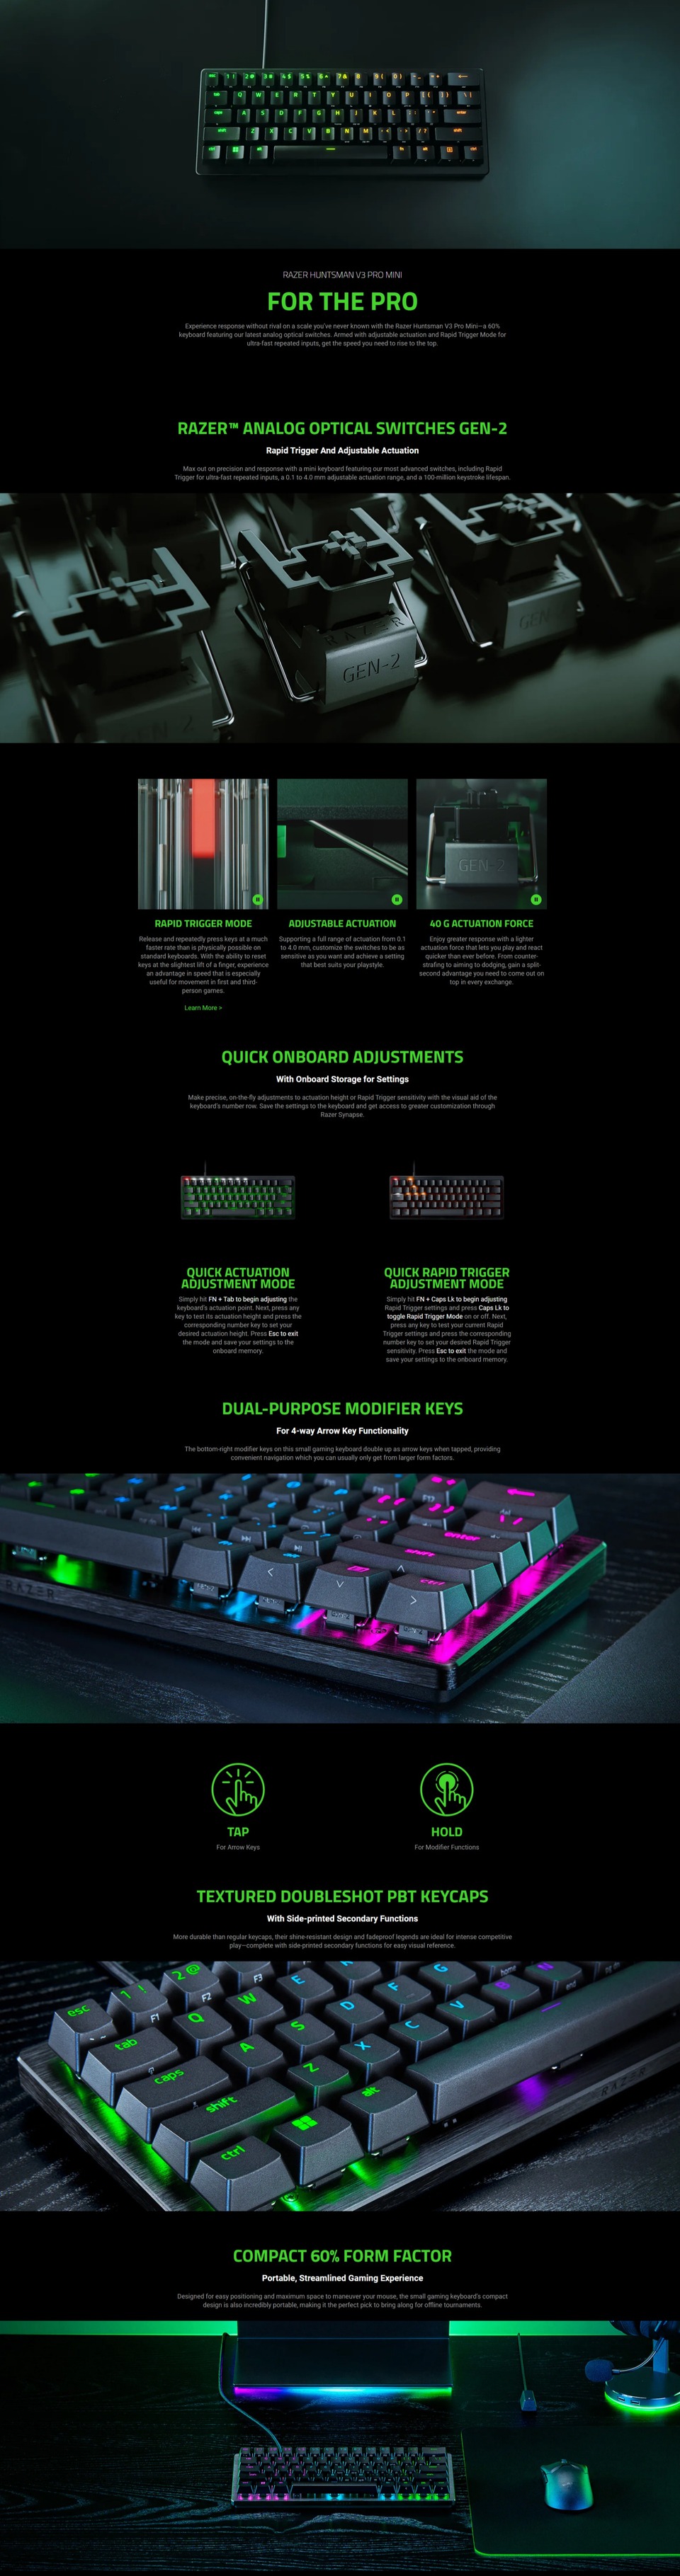 razer huntsman v3 pro mini analog optical gaming keyboard